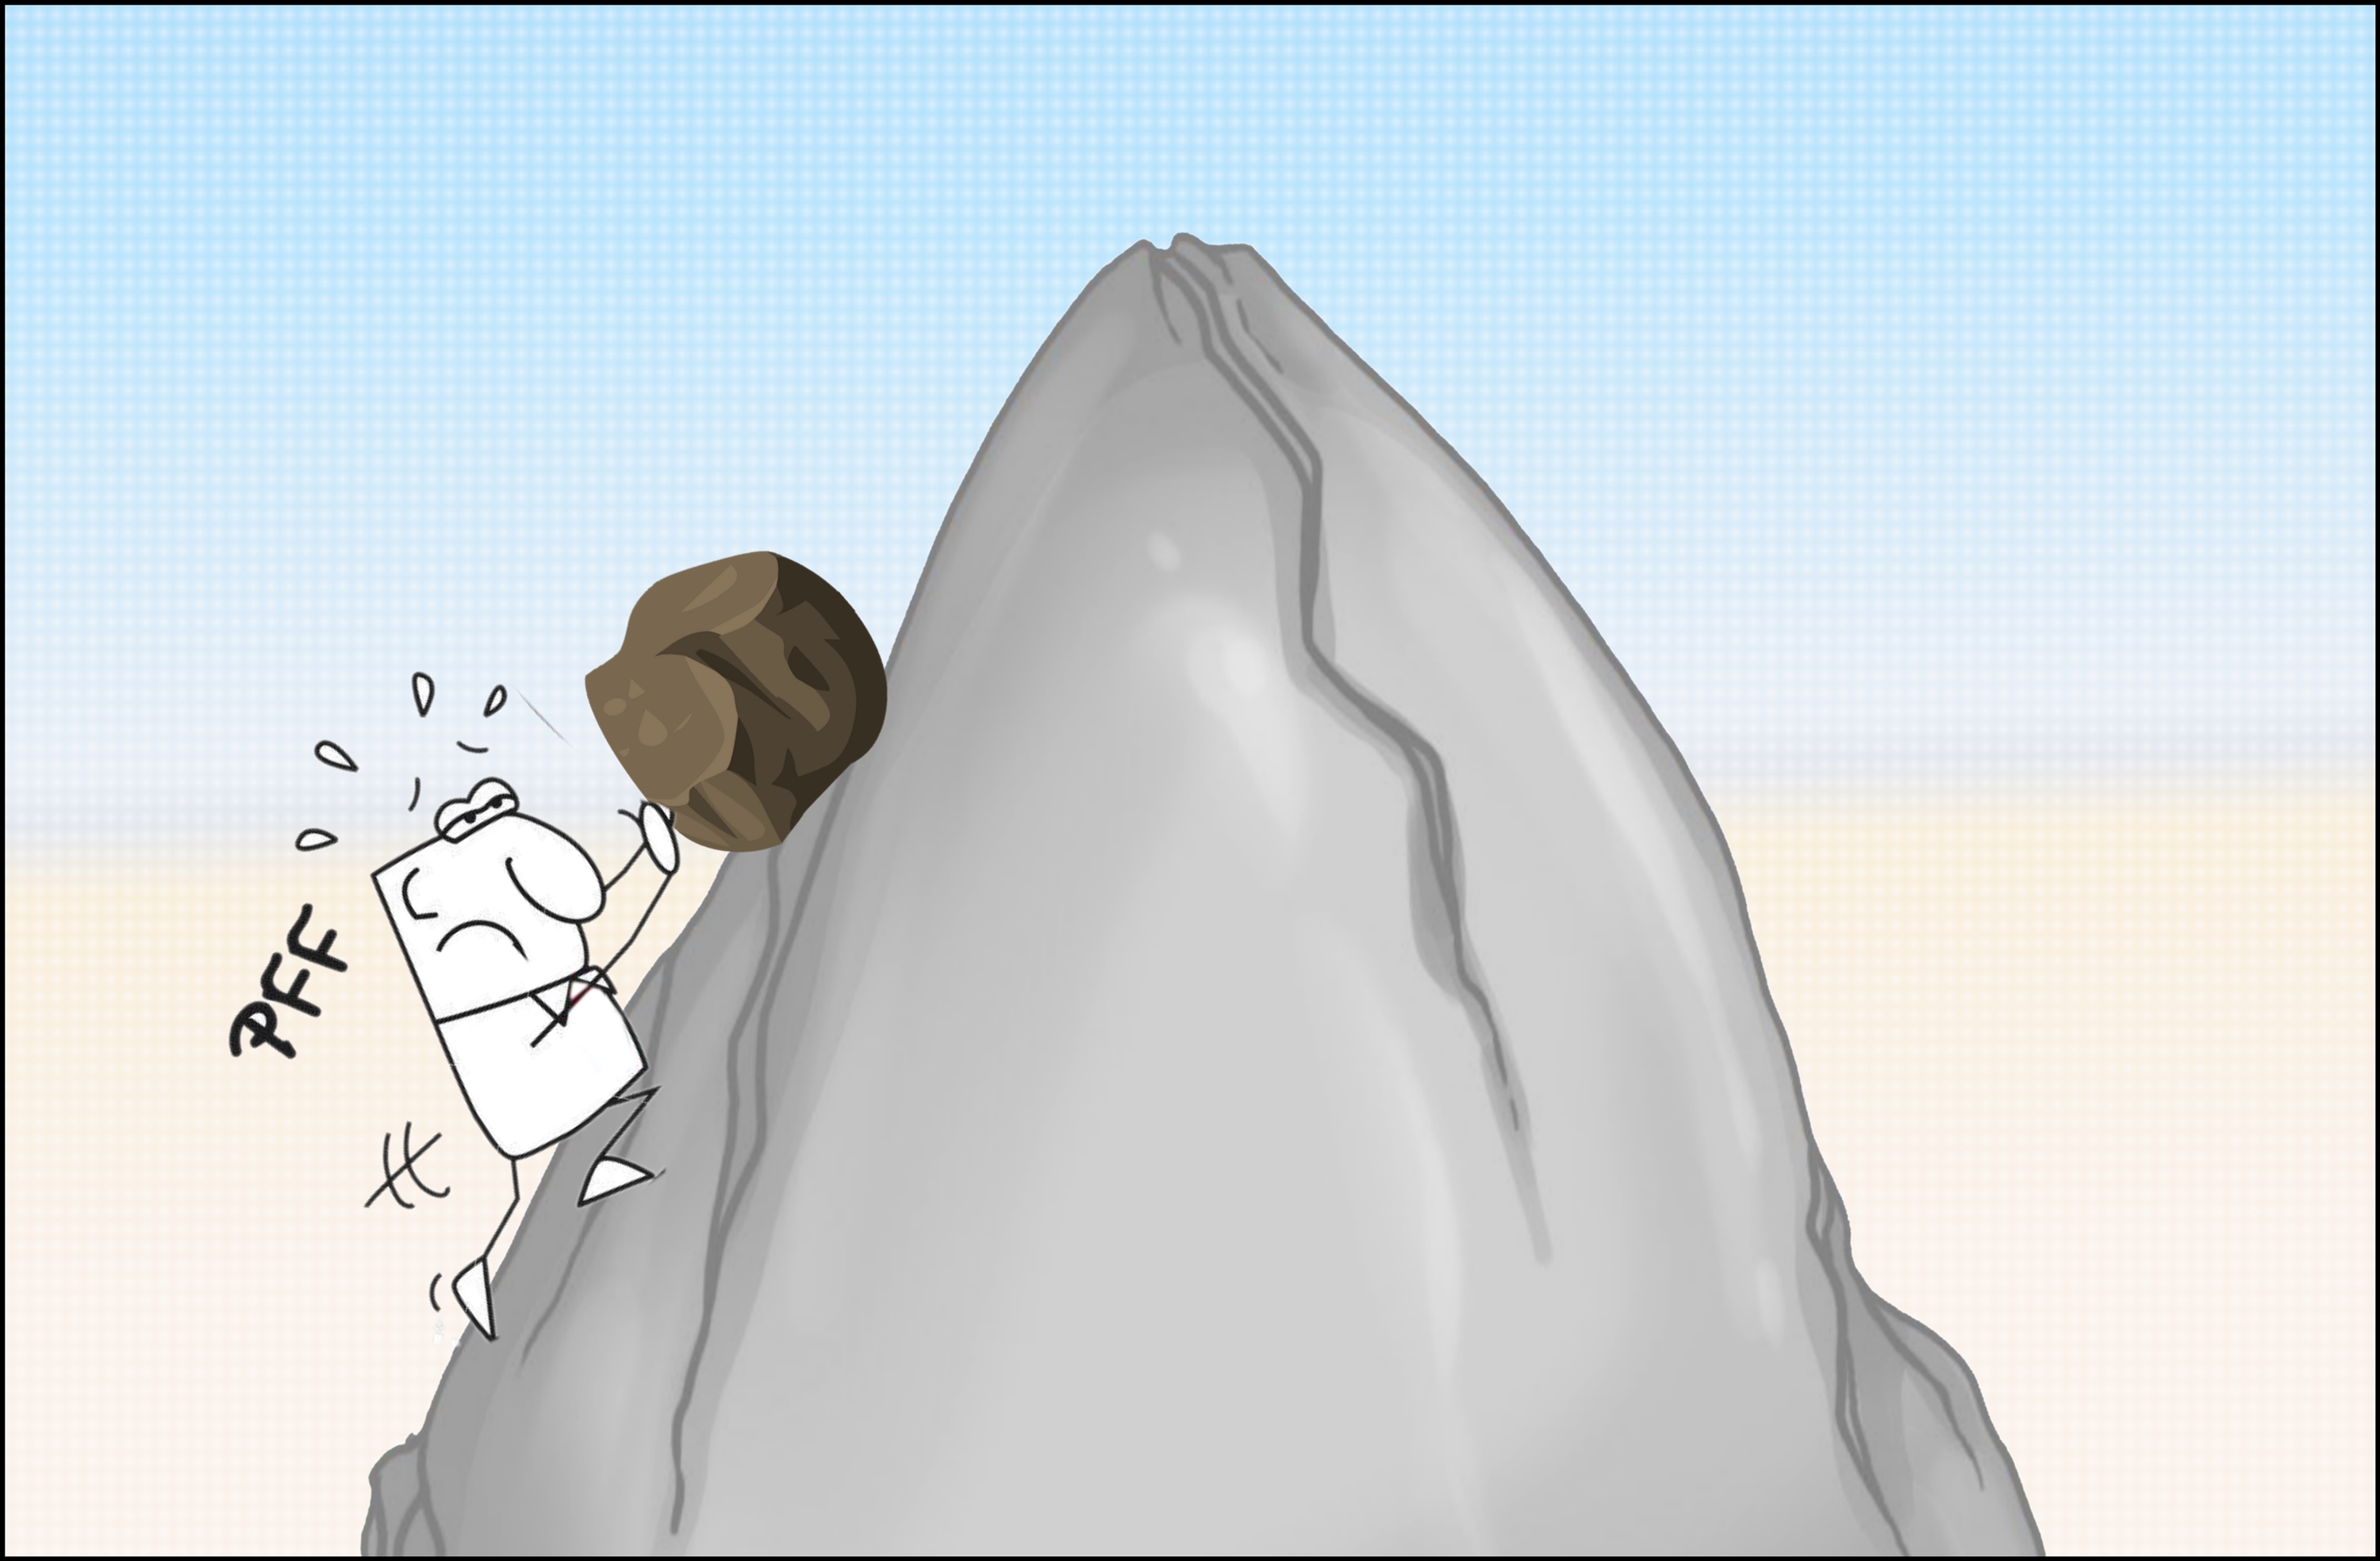 Sisyphus pushing the rock up a hill (cartoon version)